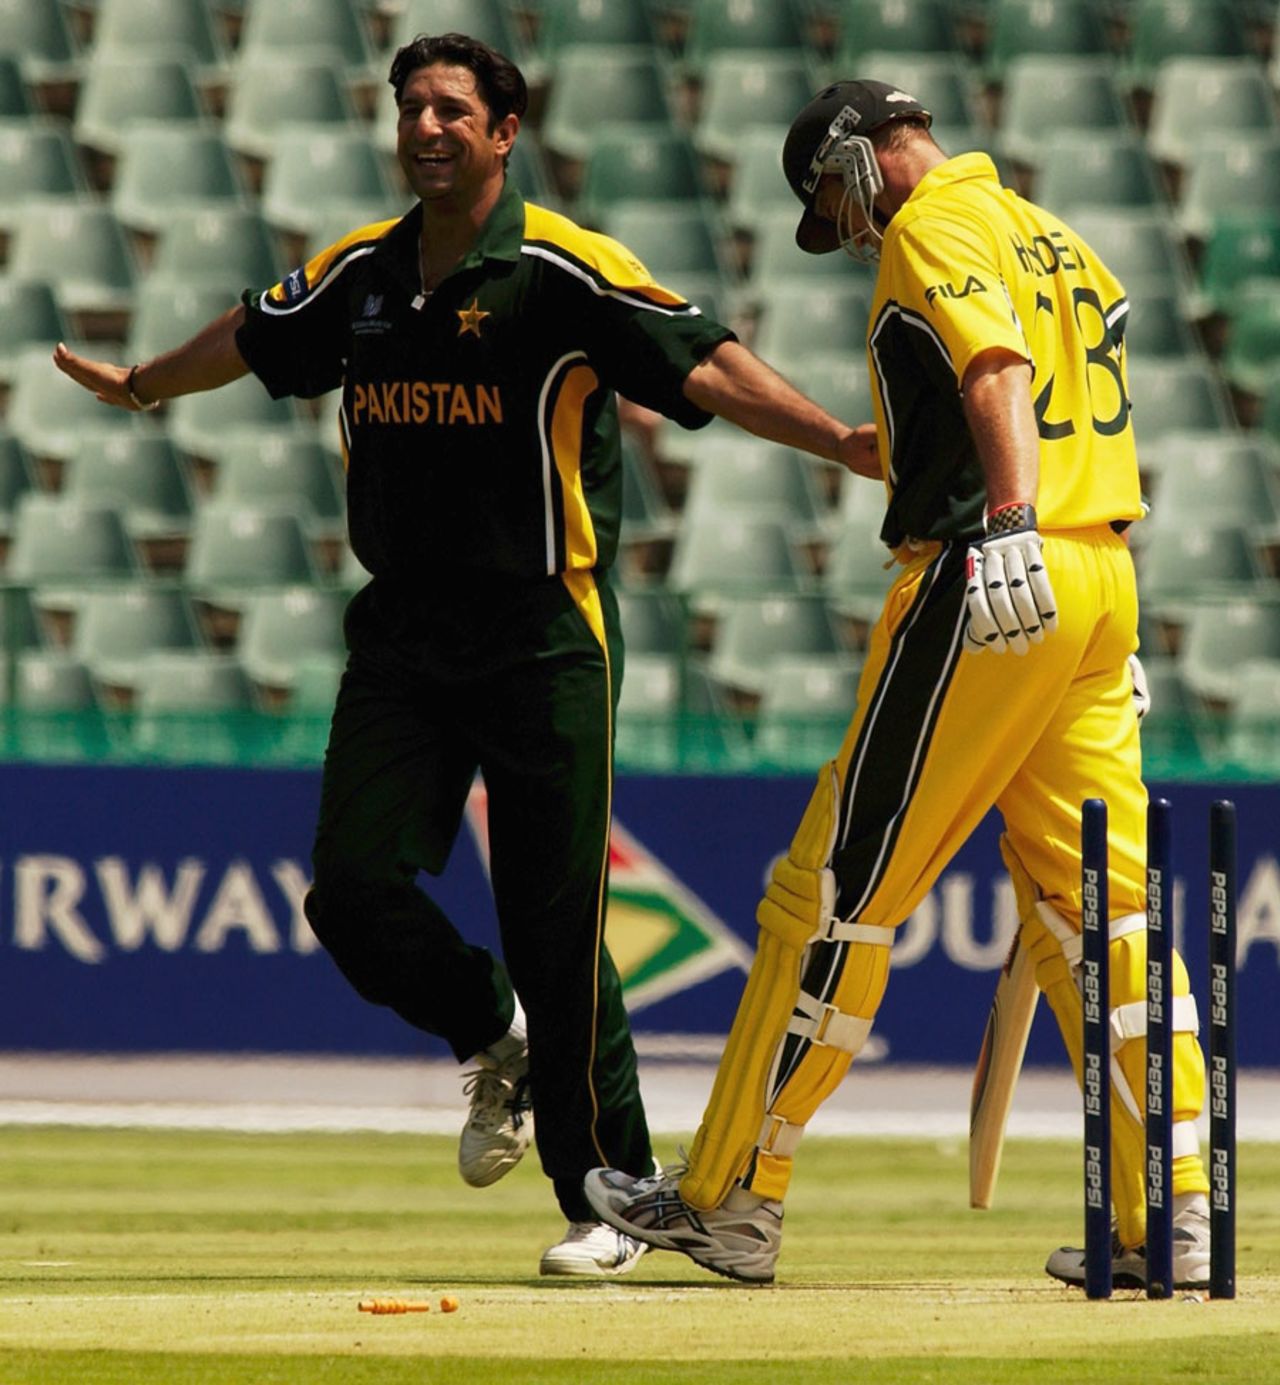 Wasim Akram bowled Matthew Hayden for 27, Australia v Pakistan, Pool A, World Cup, Johannesburg, February 11, 2003